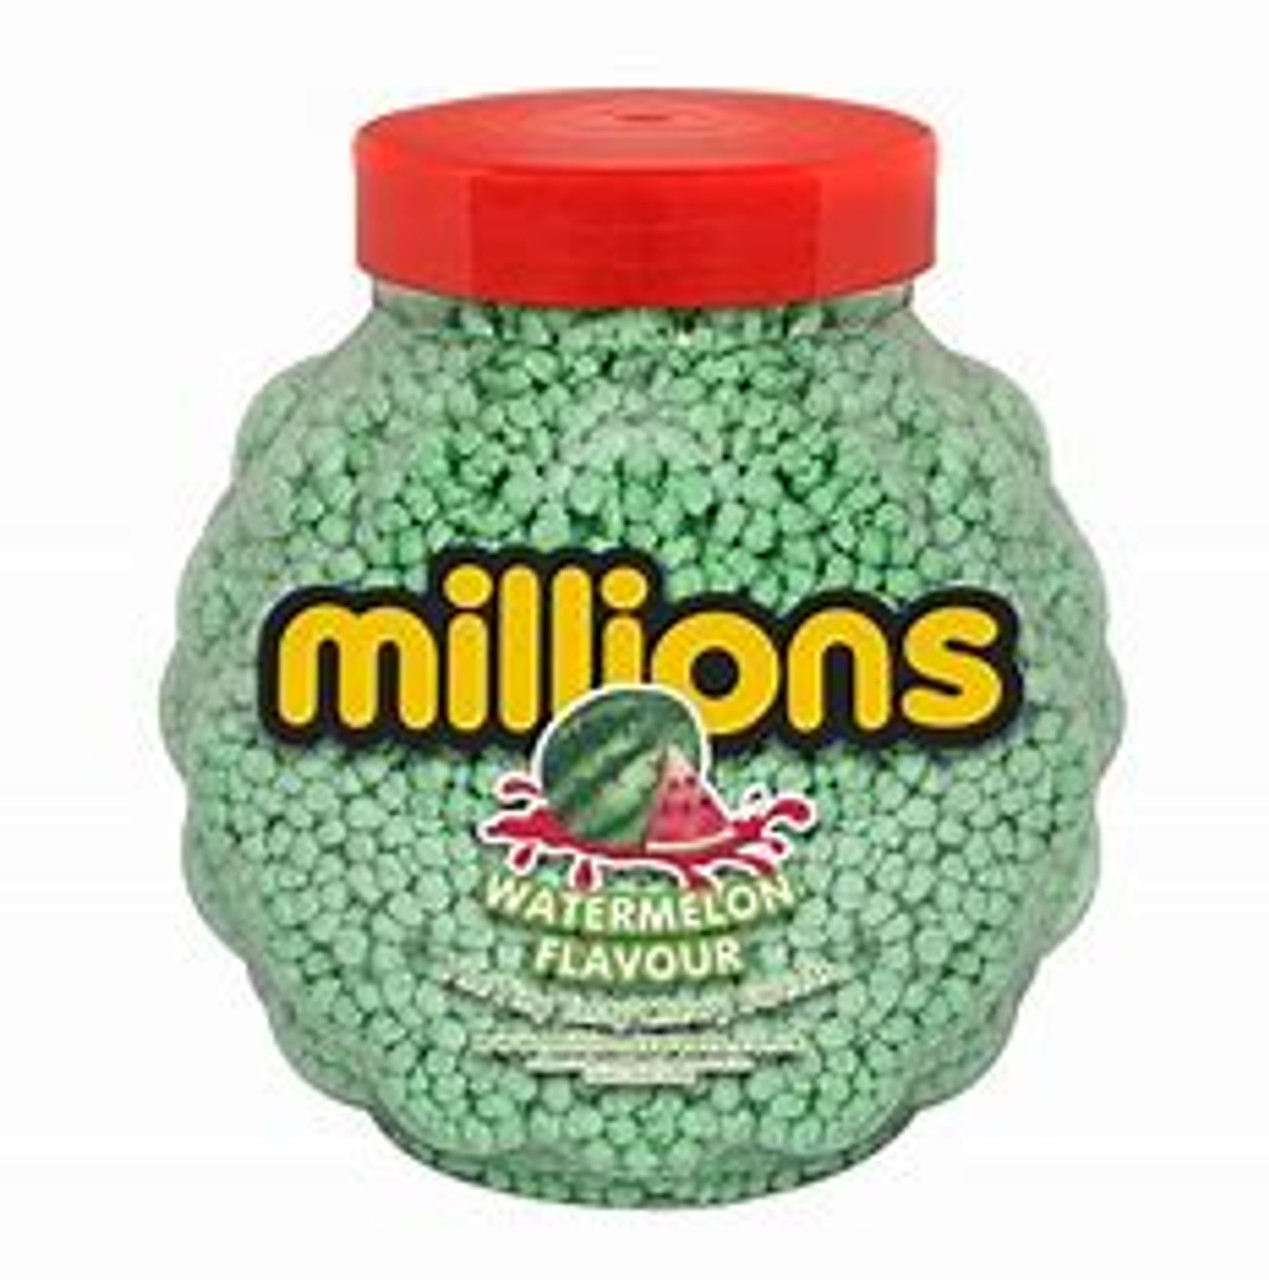 Millions Limited Edition Watermelon 2.27Kg